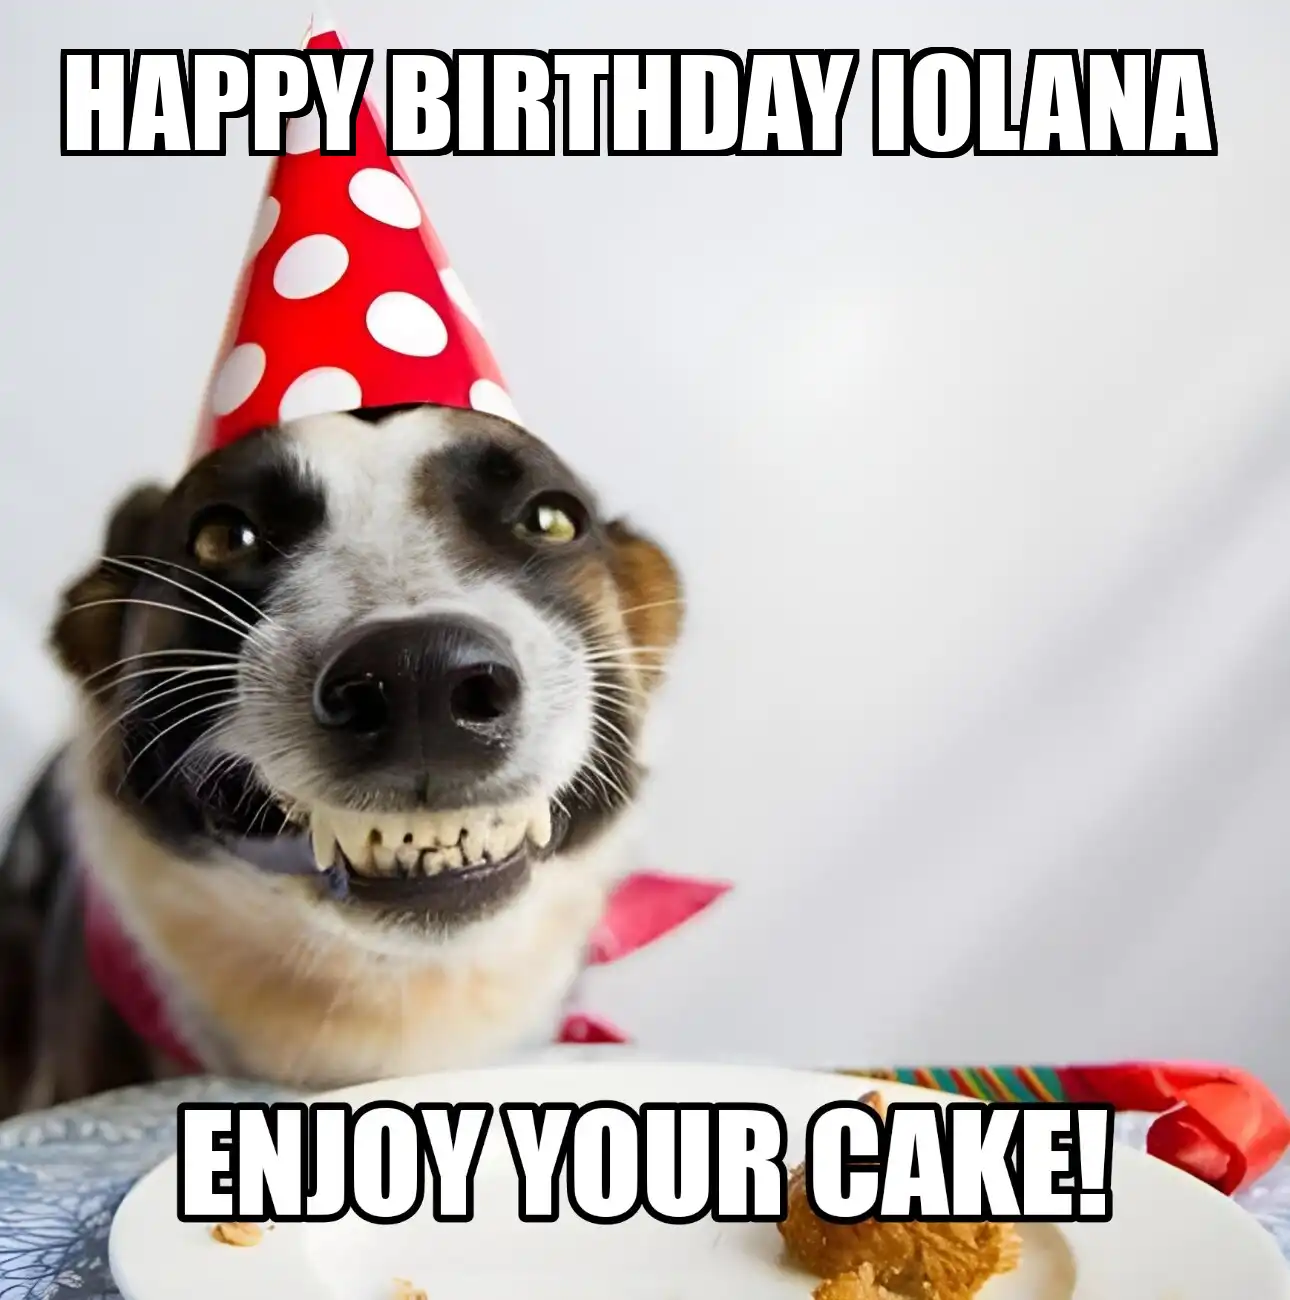 Happy Birthday Iolana Enjoy Your Cake Dog Meme